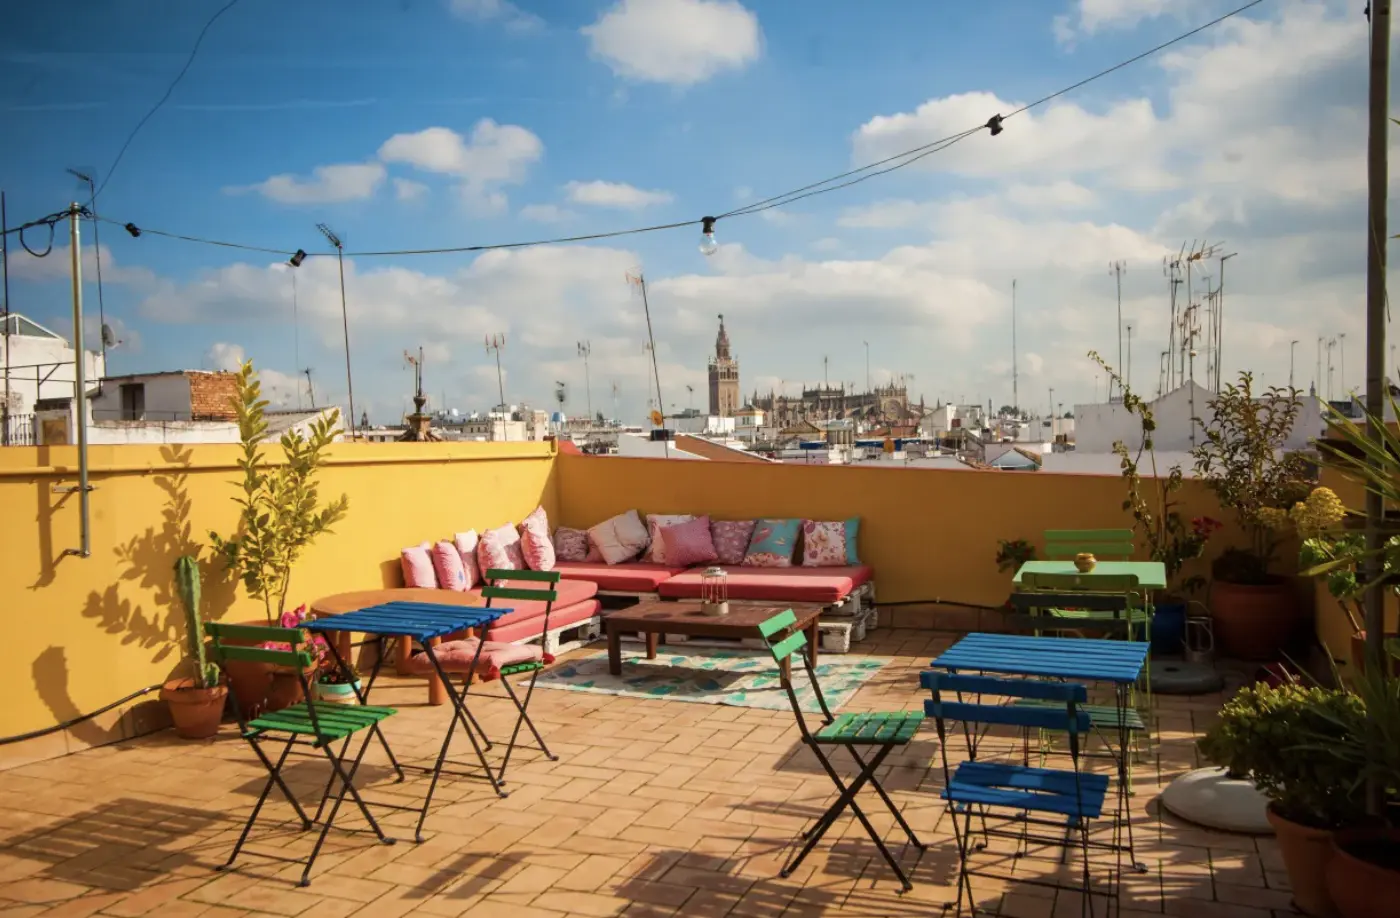 7 Of The Best Hostels In Seville